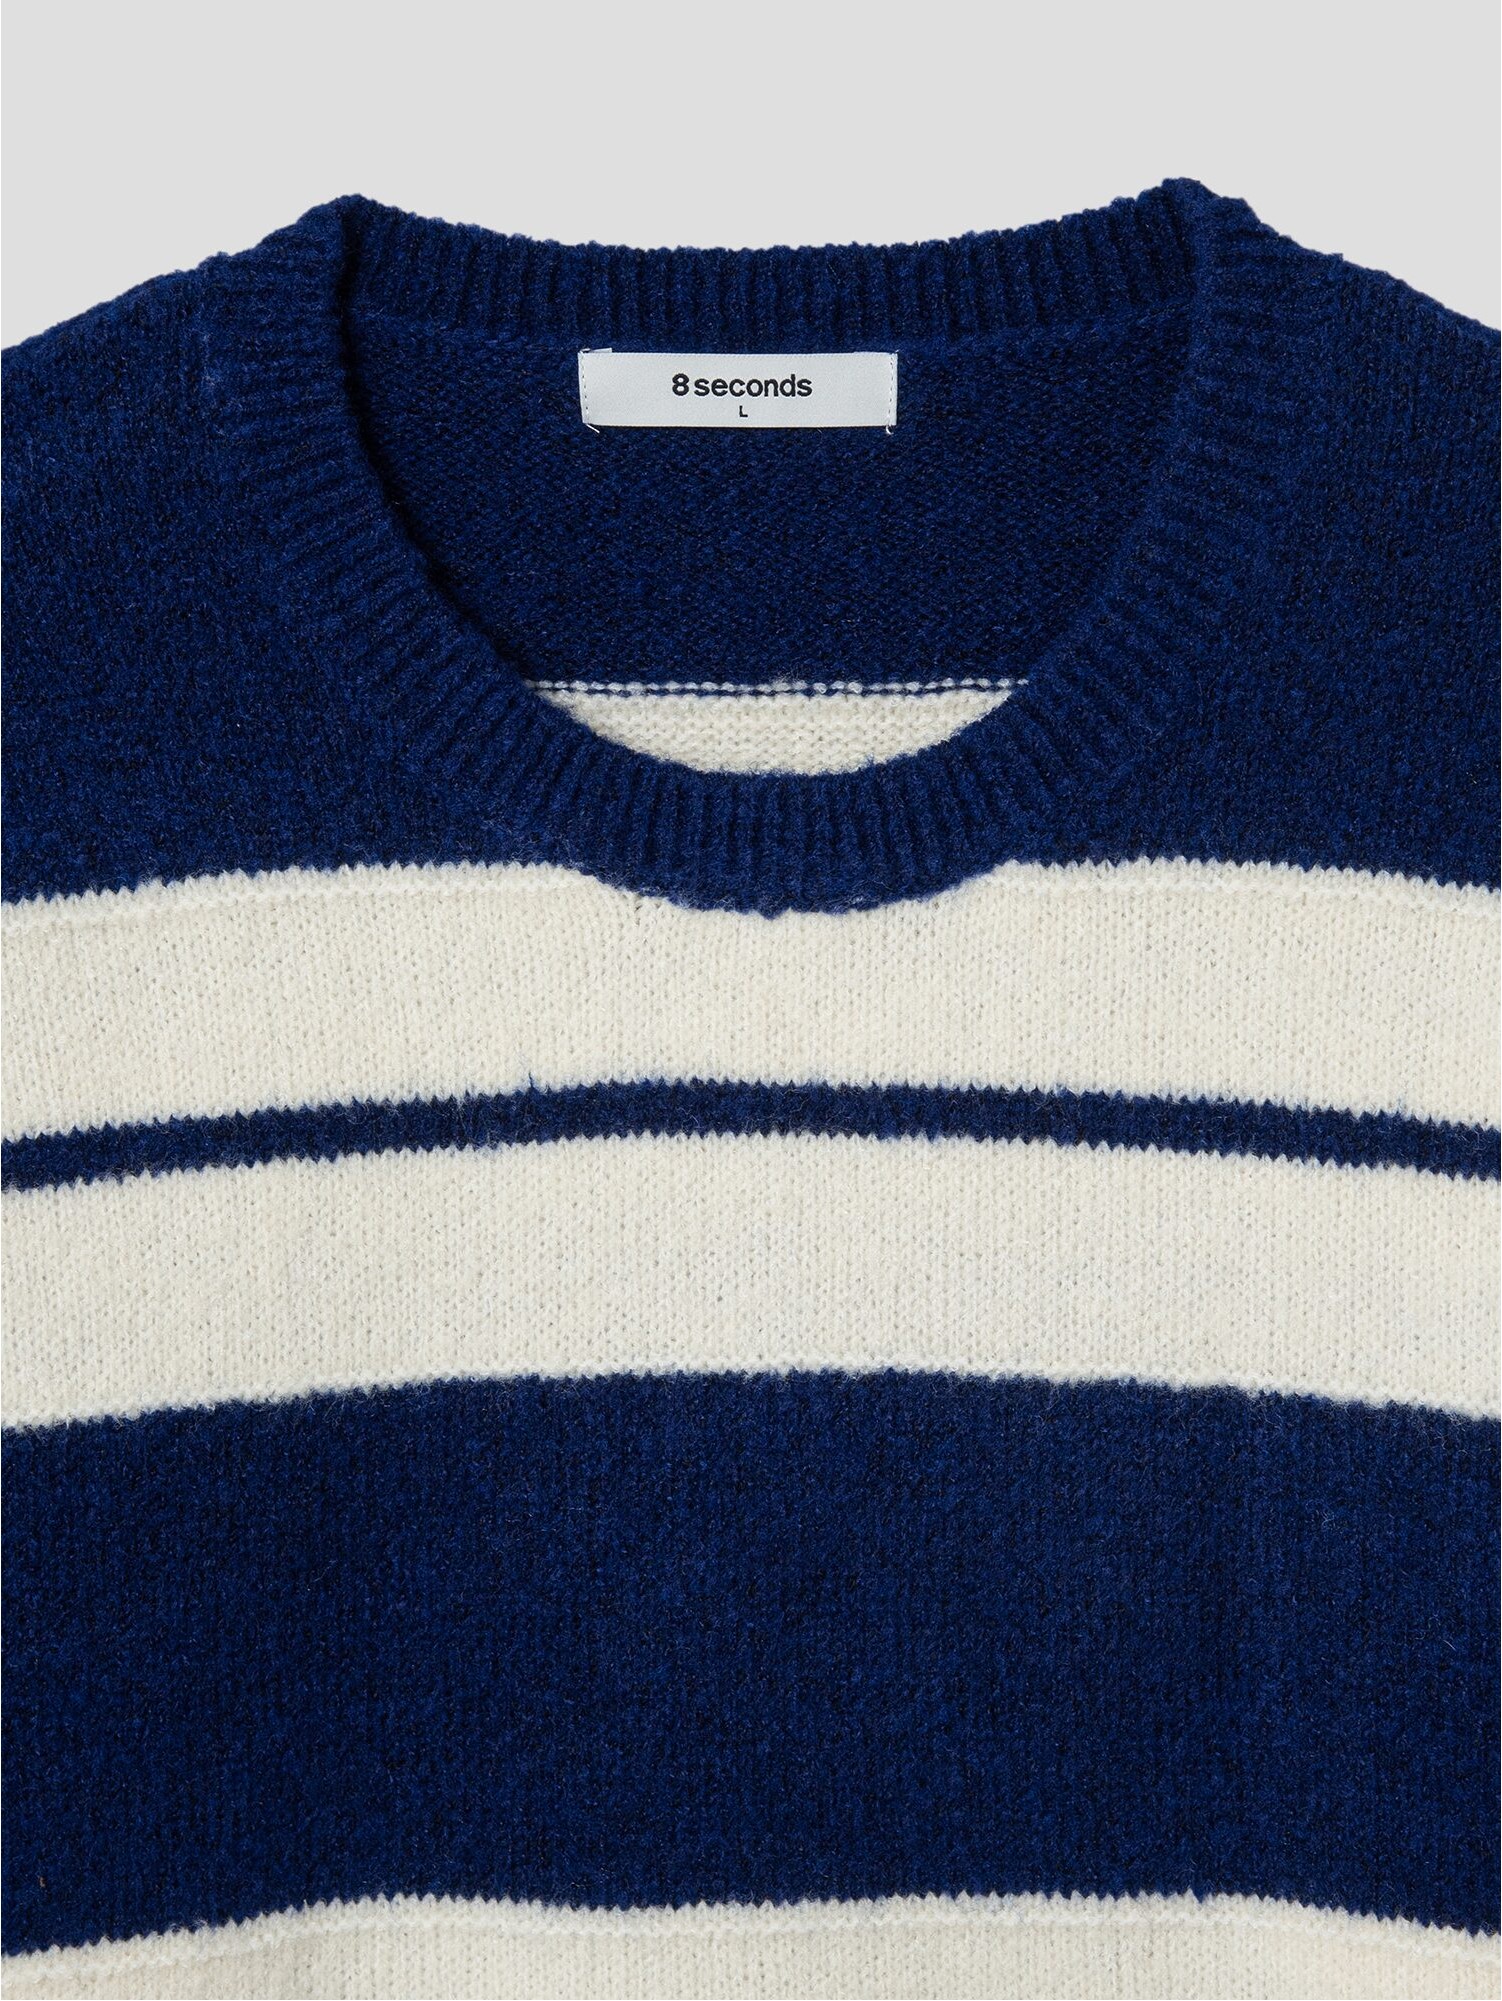 8seconds Stripes Round Neck Knit Blue | Crewneck for Men | KOODING